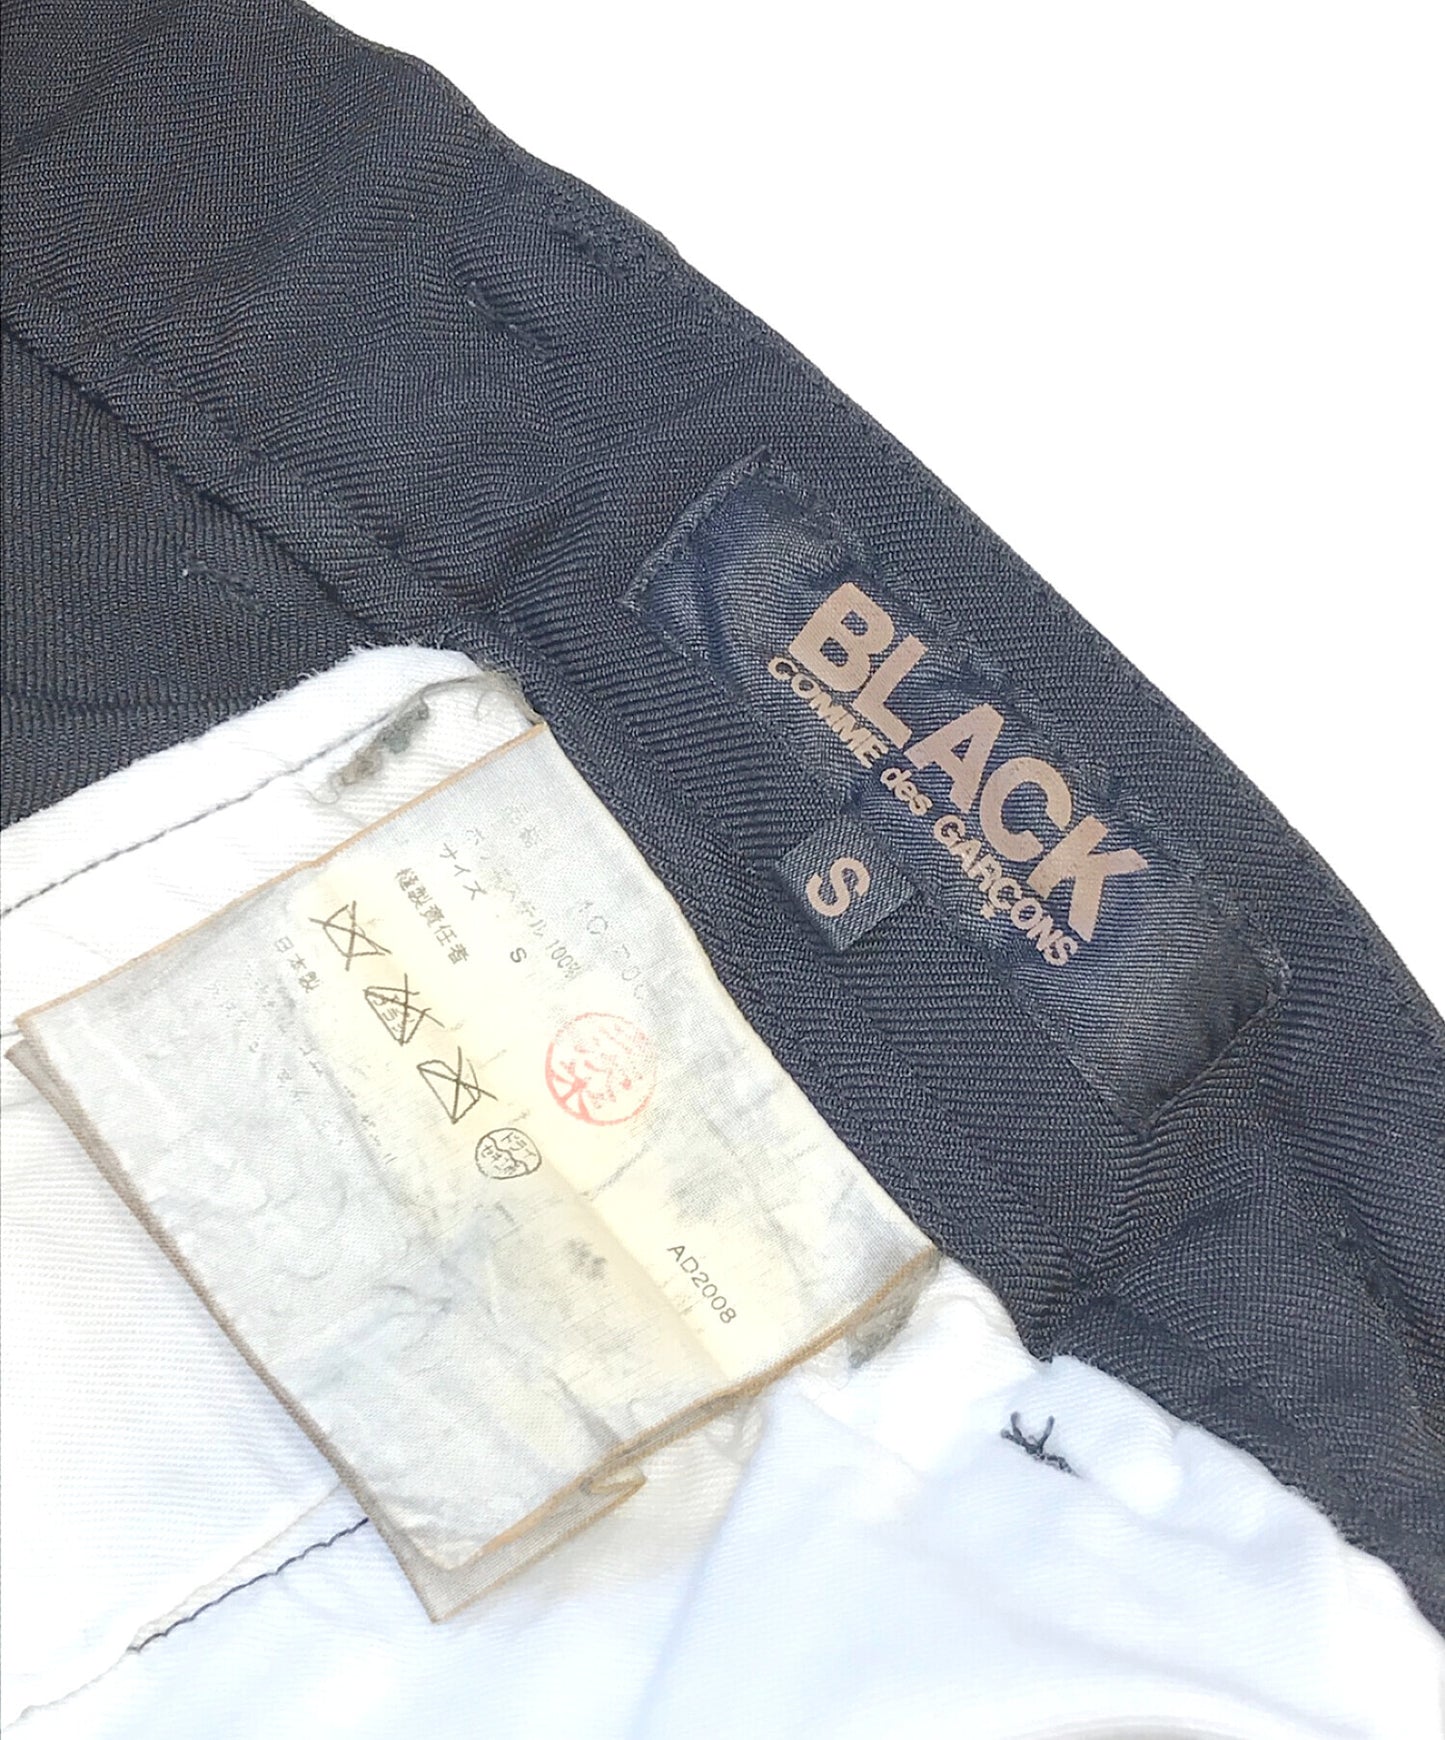 [Pre-owned] BLACK COMME des GARCONS Poly gaber sarouel shorts